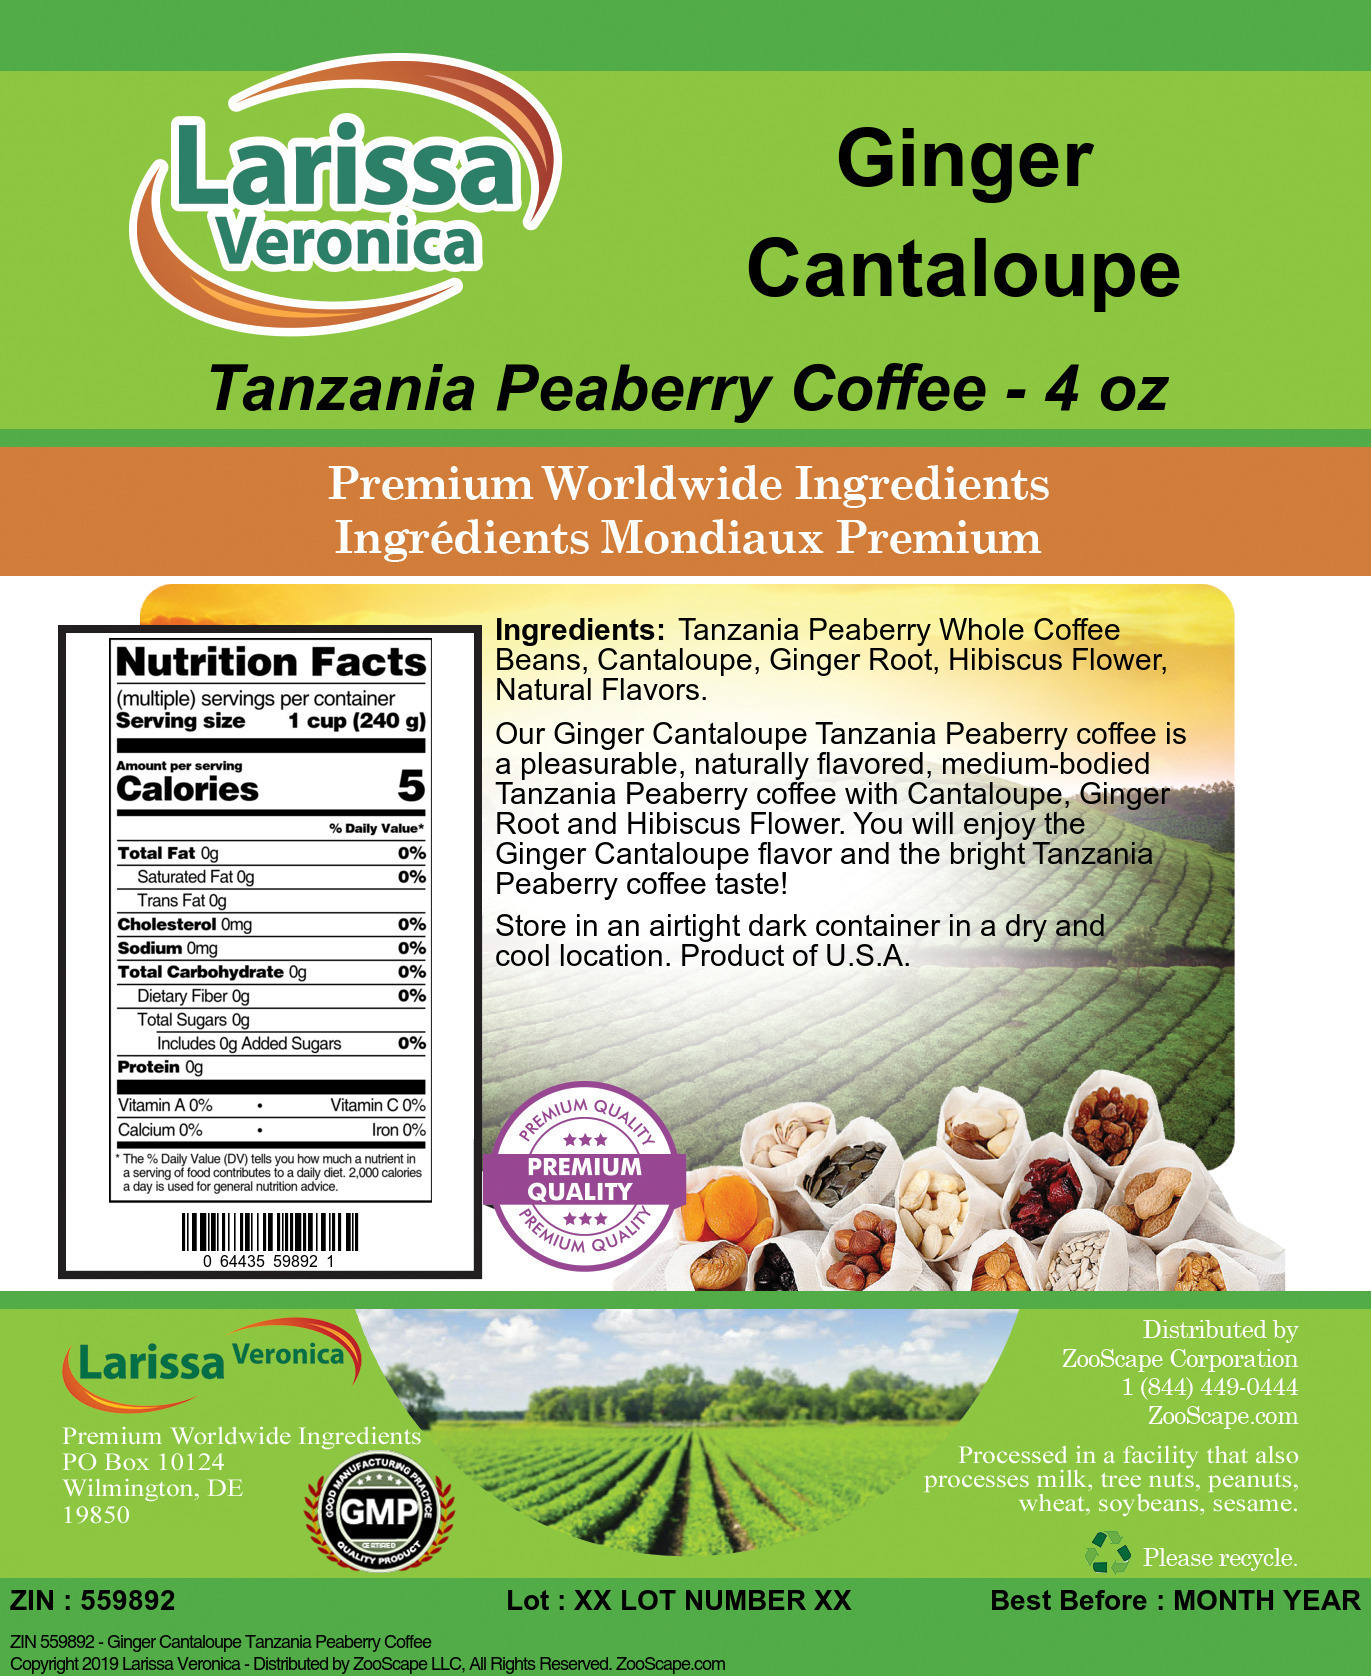 Ginger Cantaloupe Tanzania Peaberry Coffee - Label